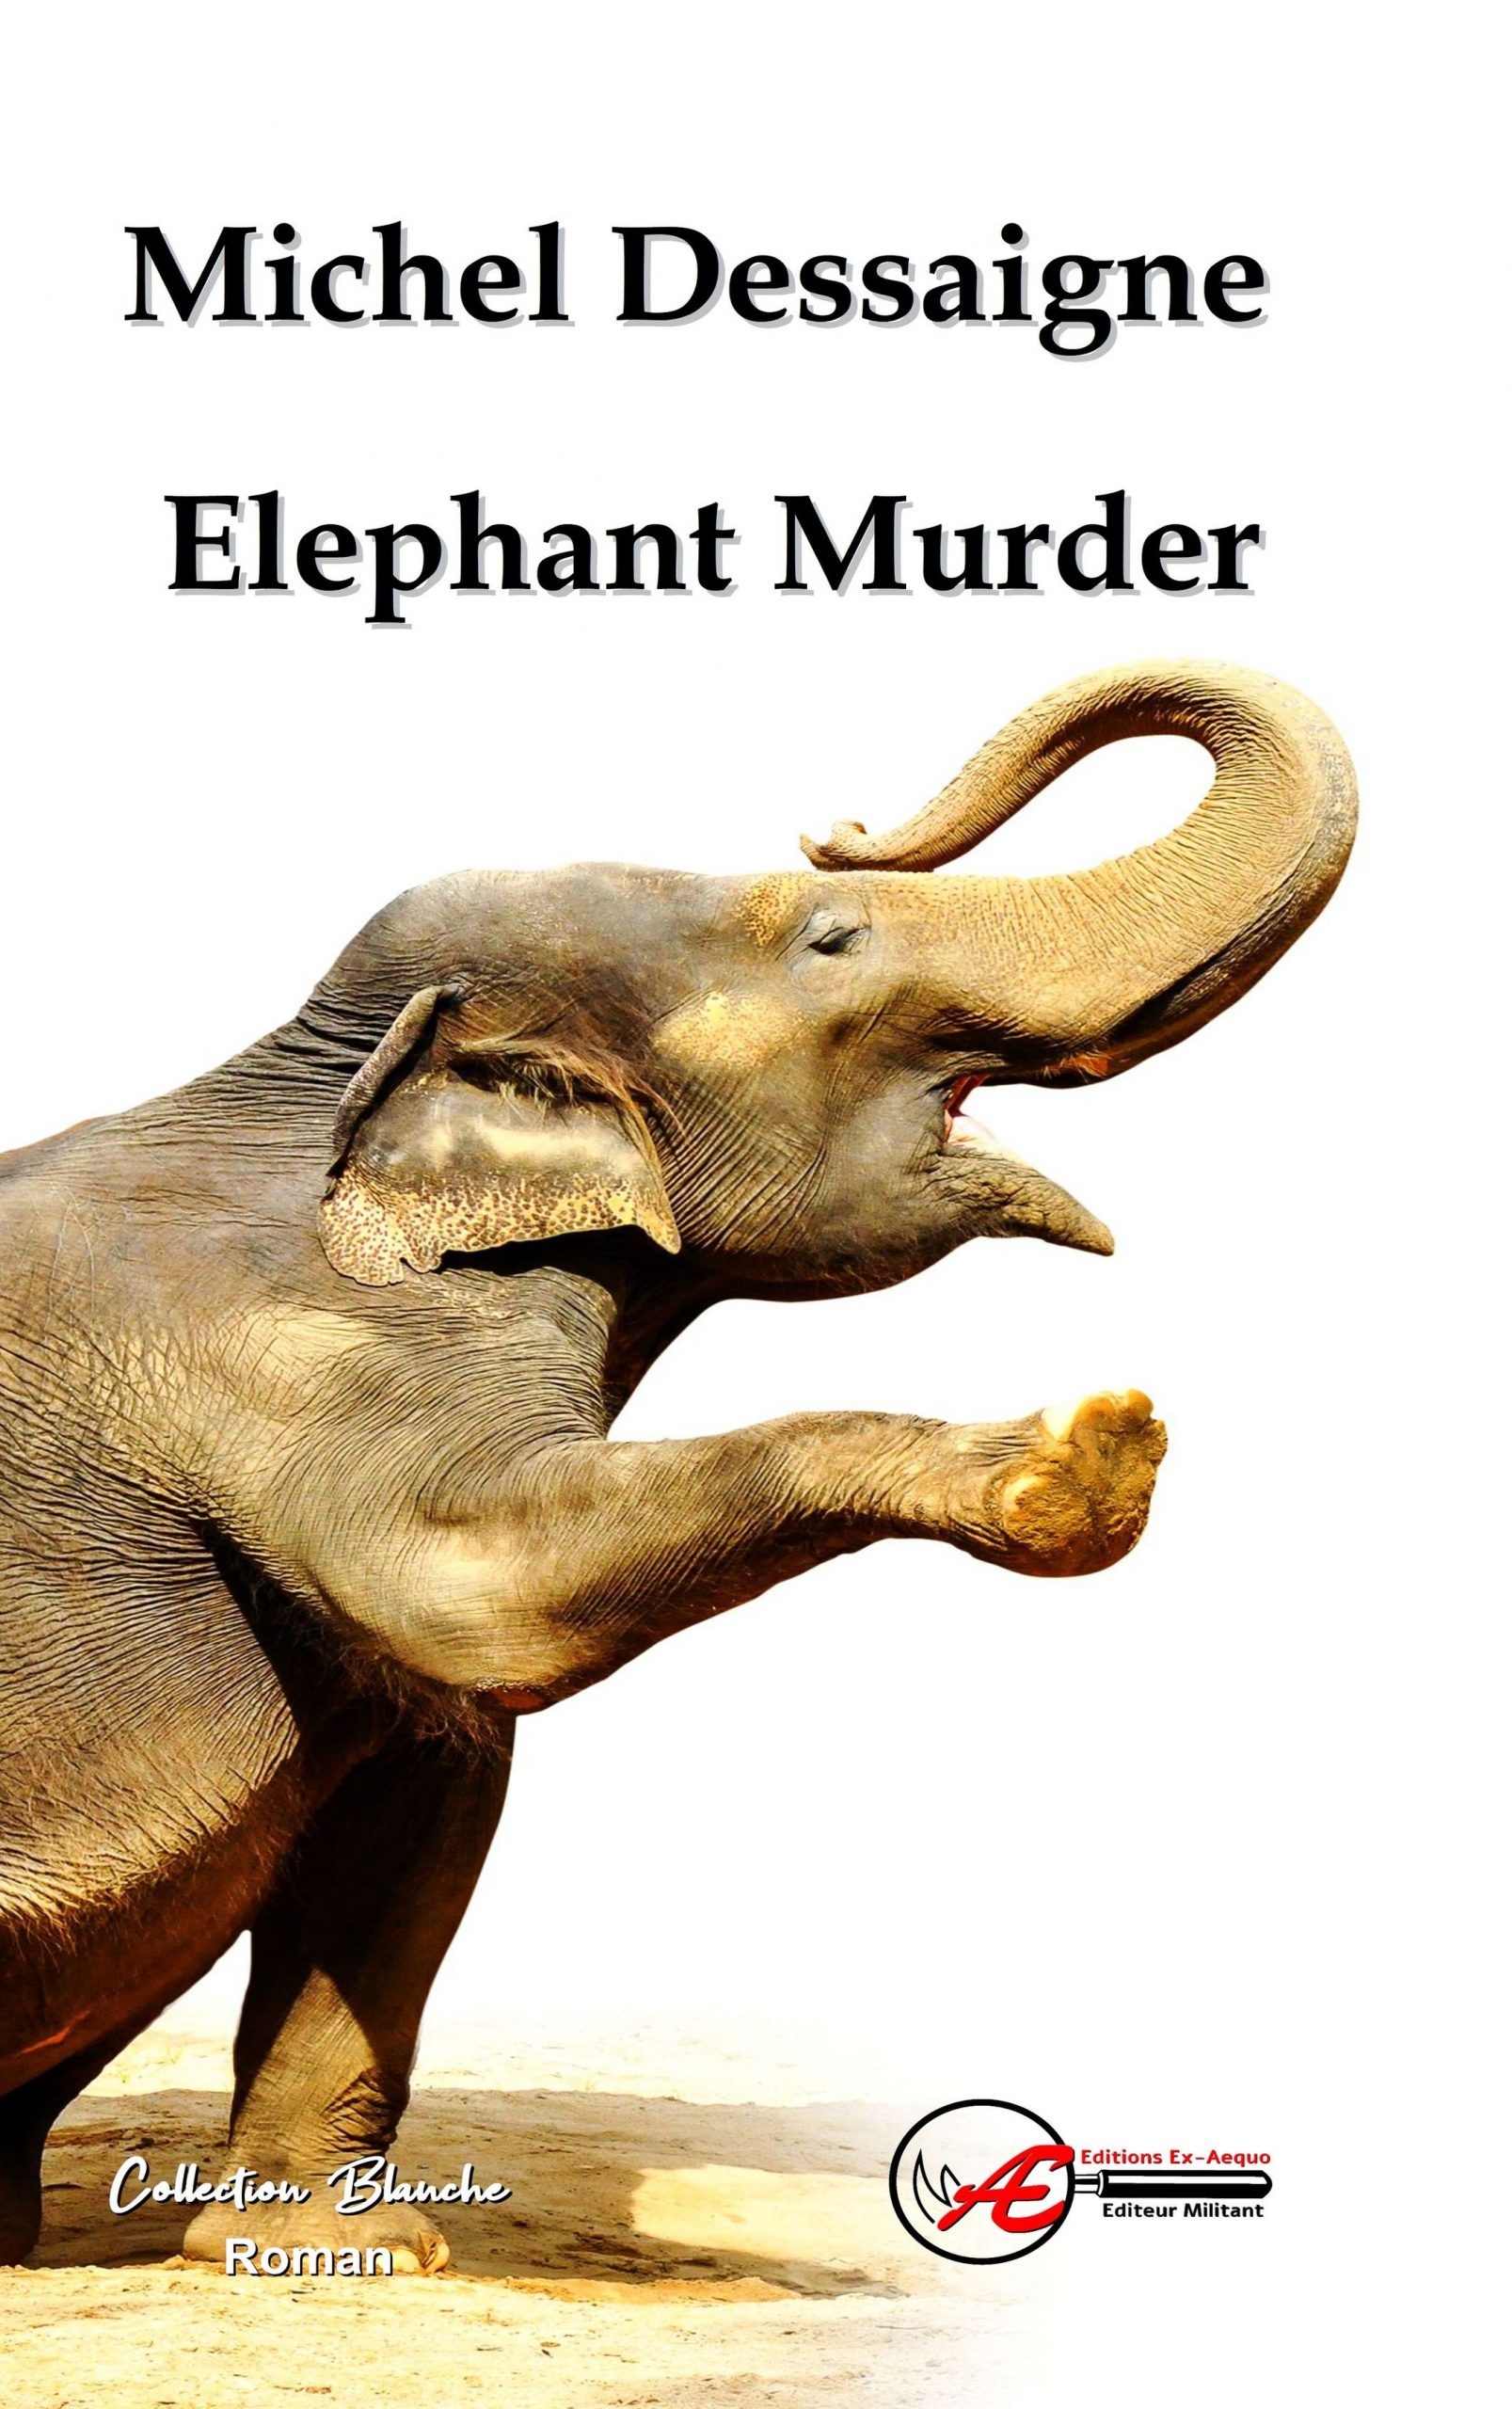 You are currently viewing Elephant Murder, de Michel Dessaigne